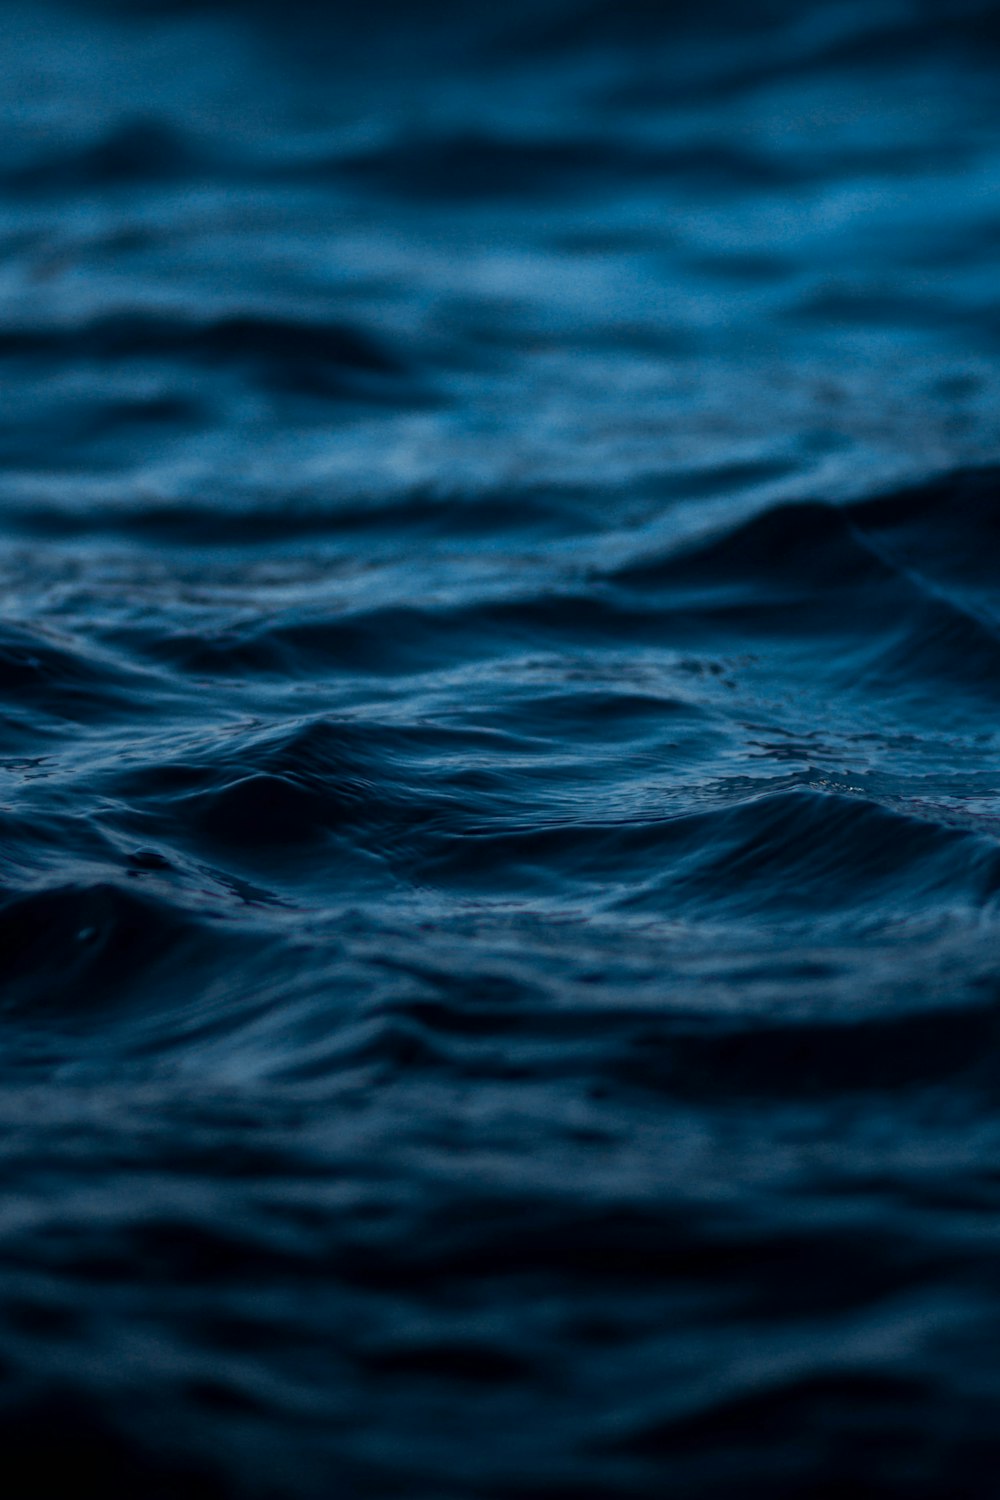 Zeitrafferfotografie des blauen Meeres